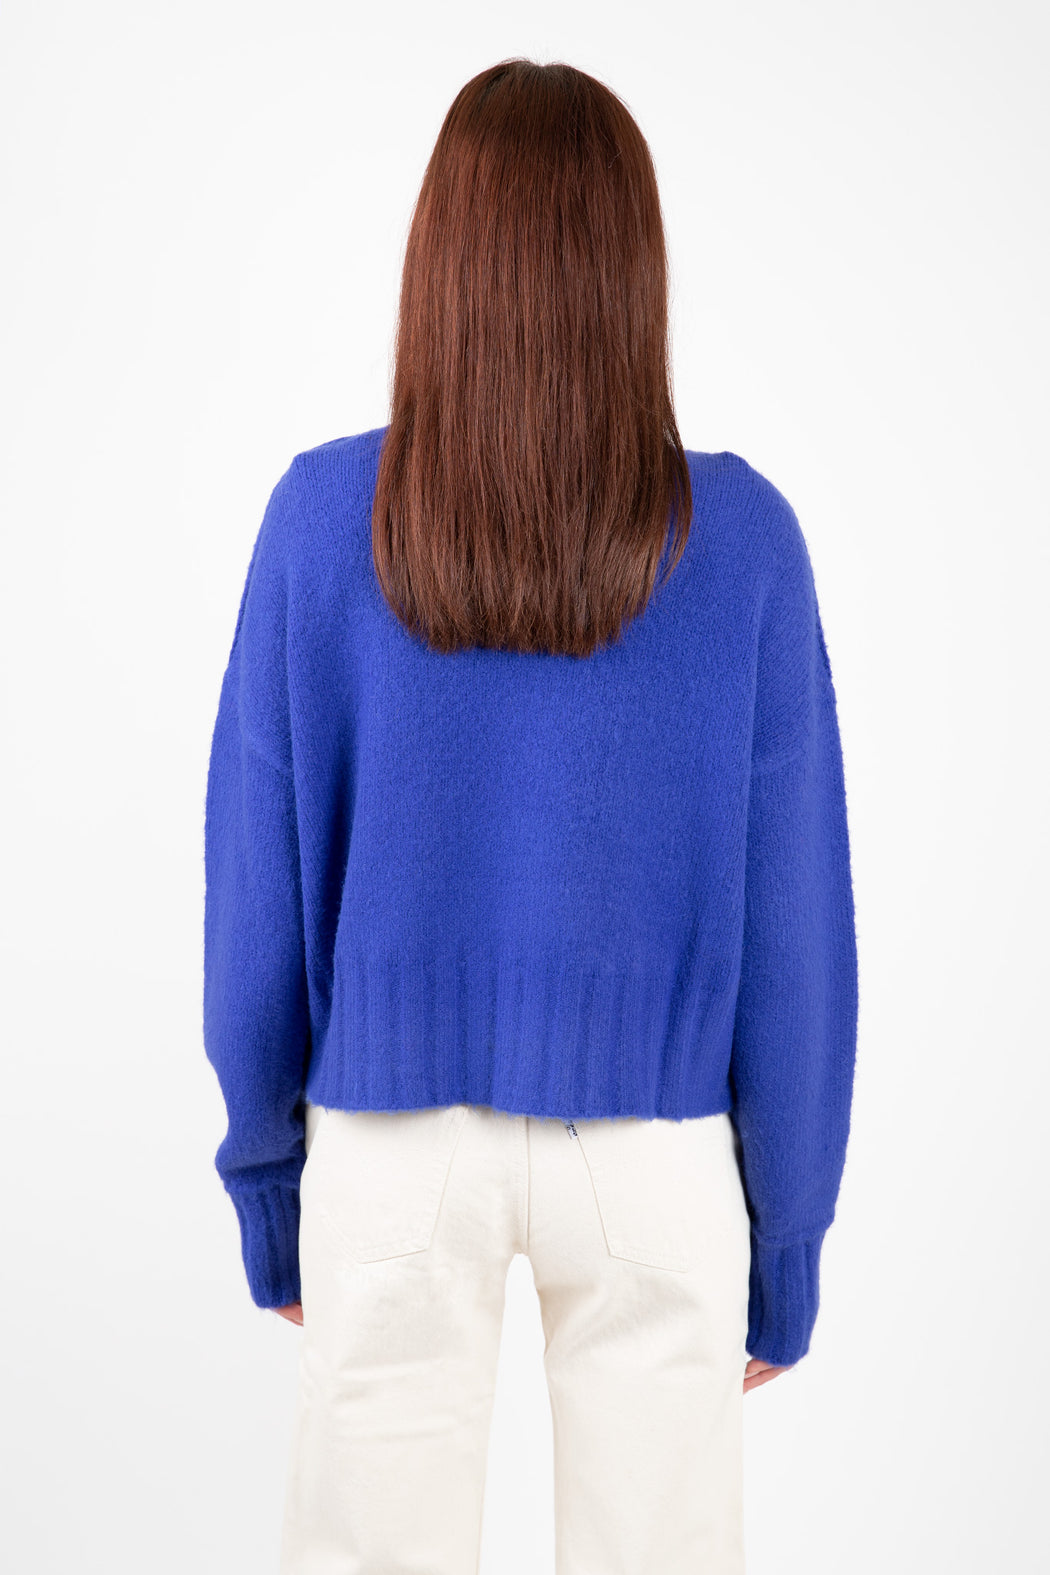 Lyla-Luxe-Timmy-Crewneck-Sweater-Cobalt-Blue